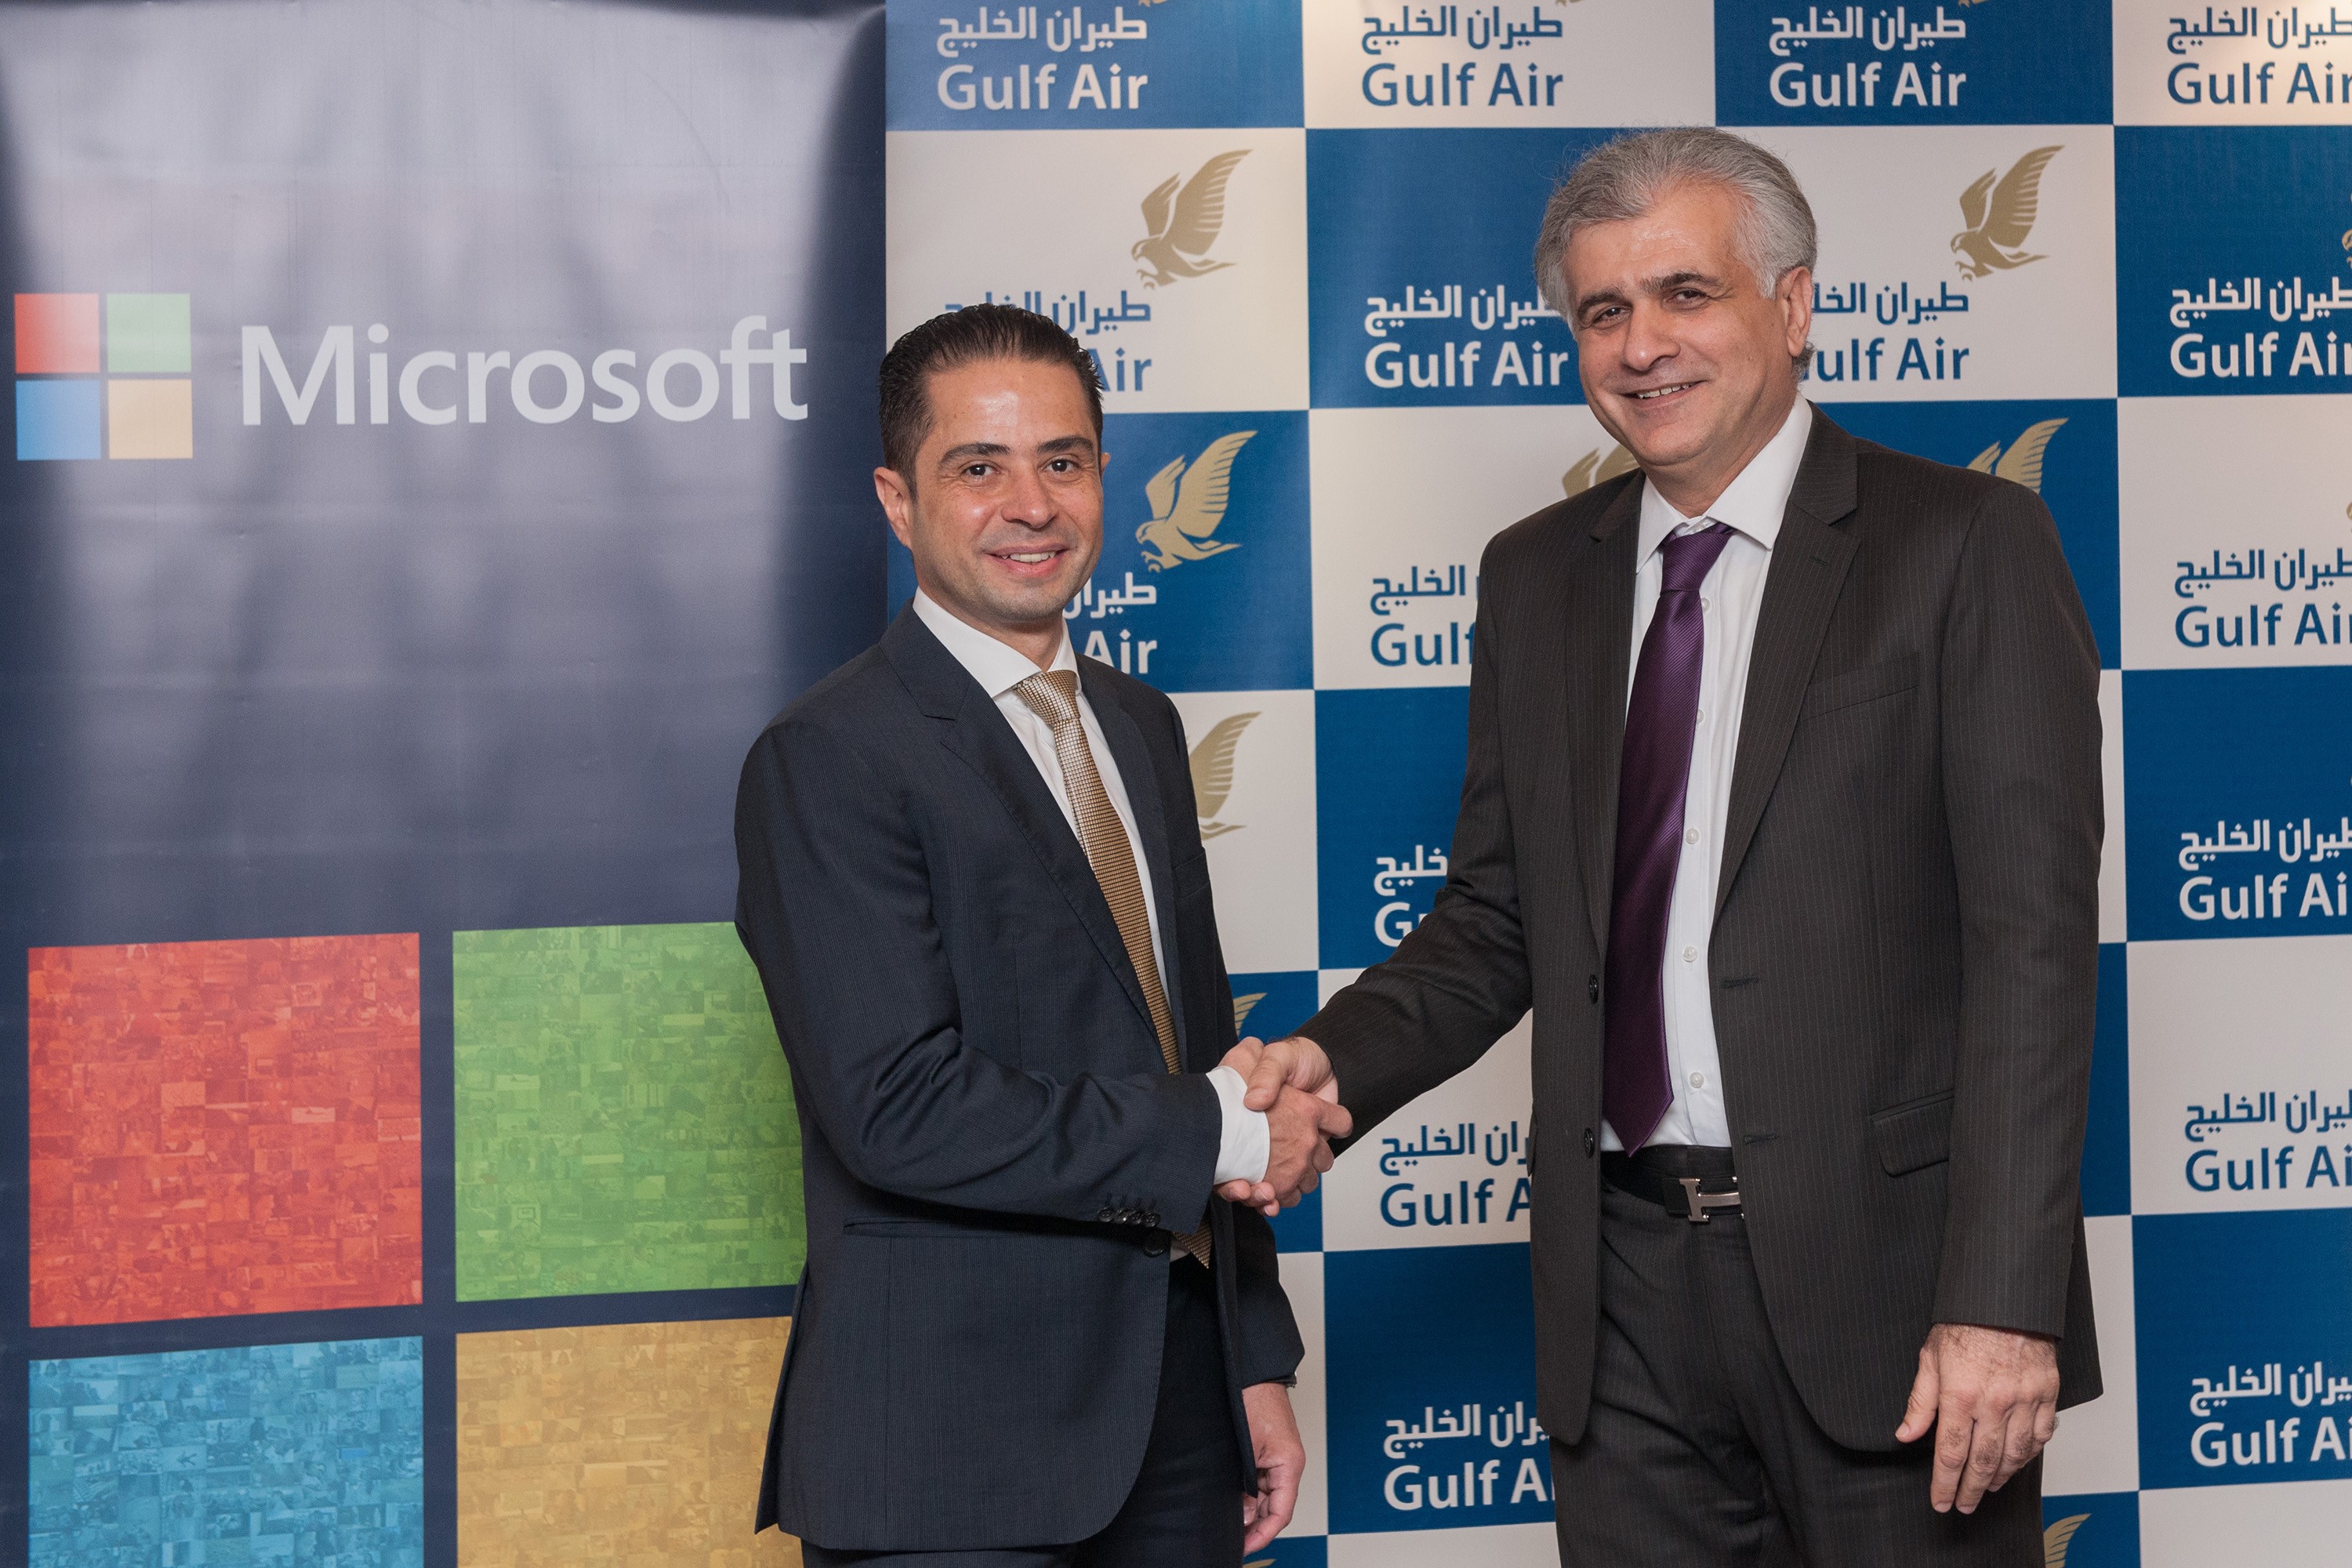 Gulf Air deploys Microsoft Skype for Business